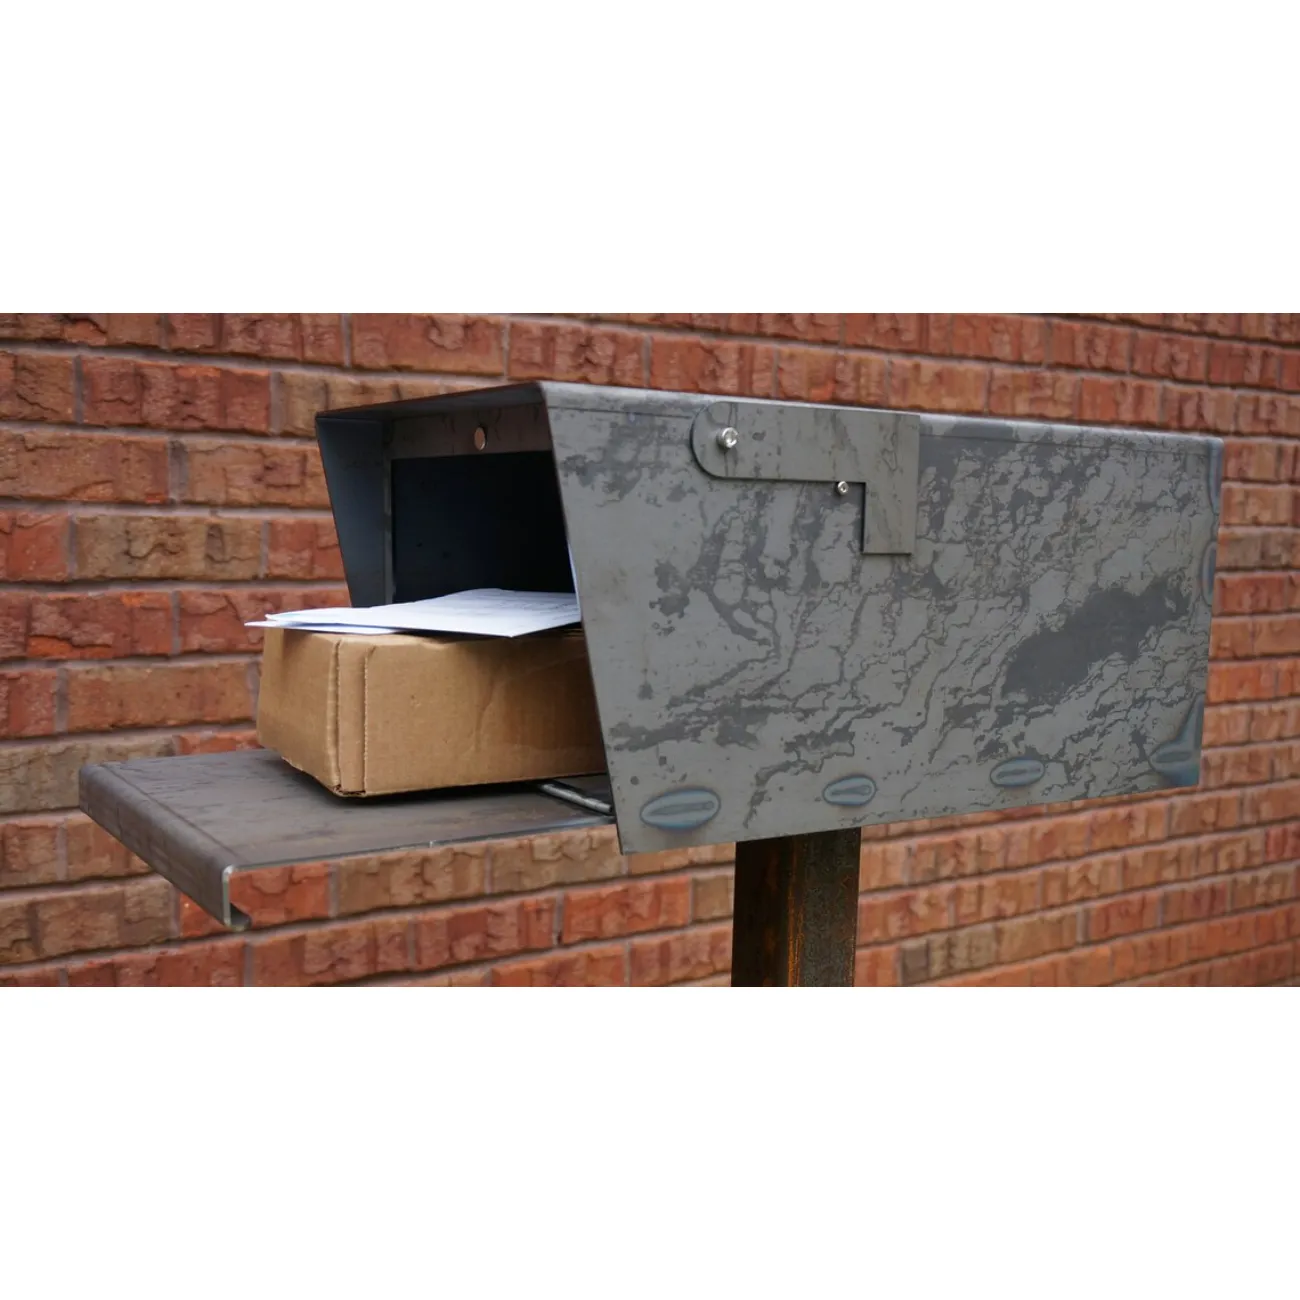 Mektup kutusu parlak cilalı bahçe mektup posta kutusu oluşur galvanizli gri renk ofis posta servisi saklama kutusu duvara monte